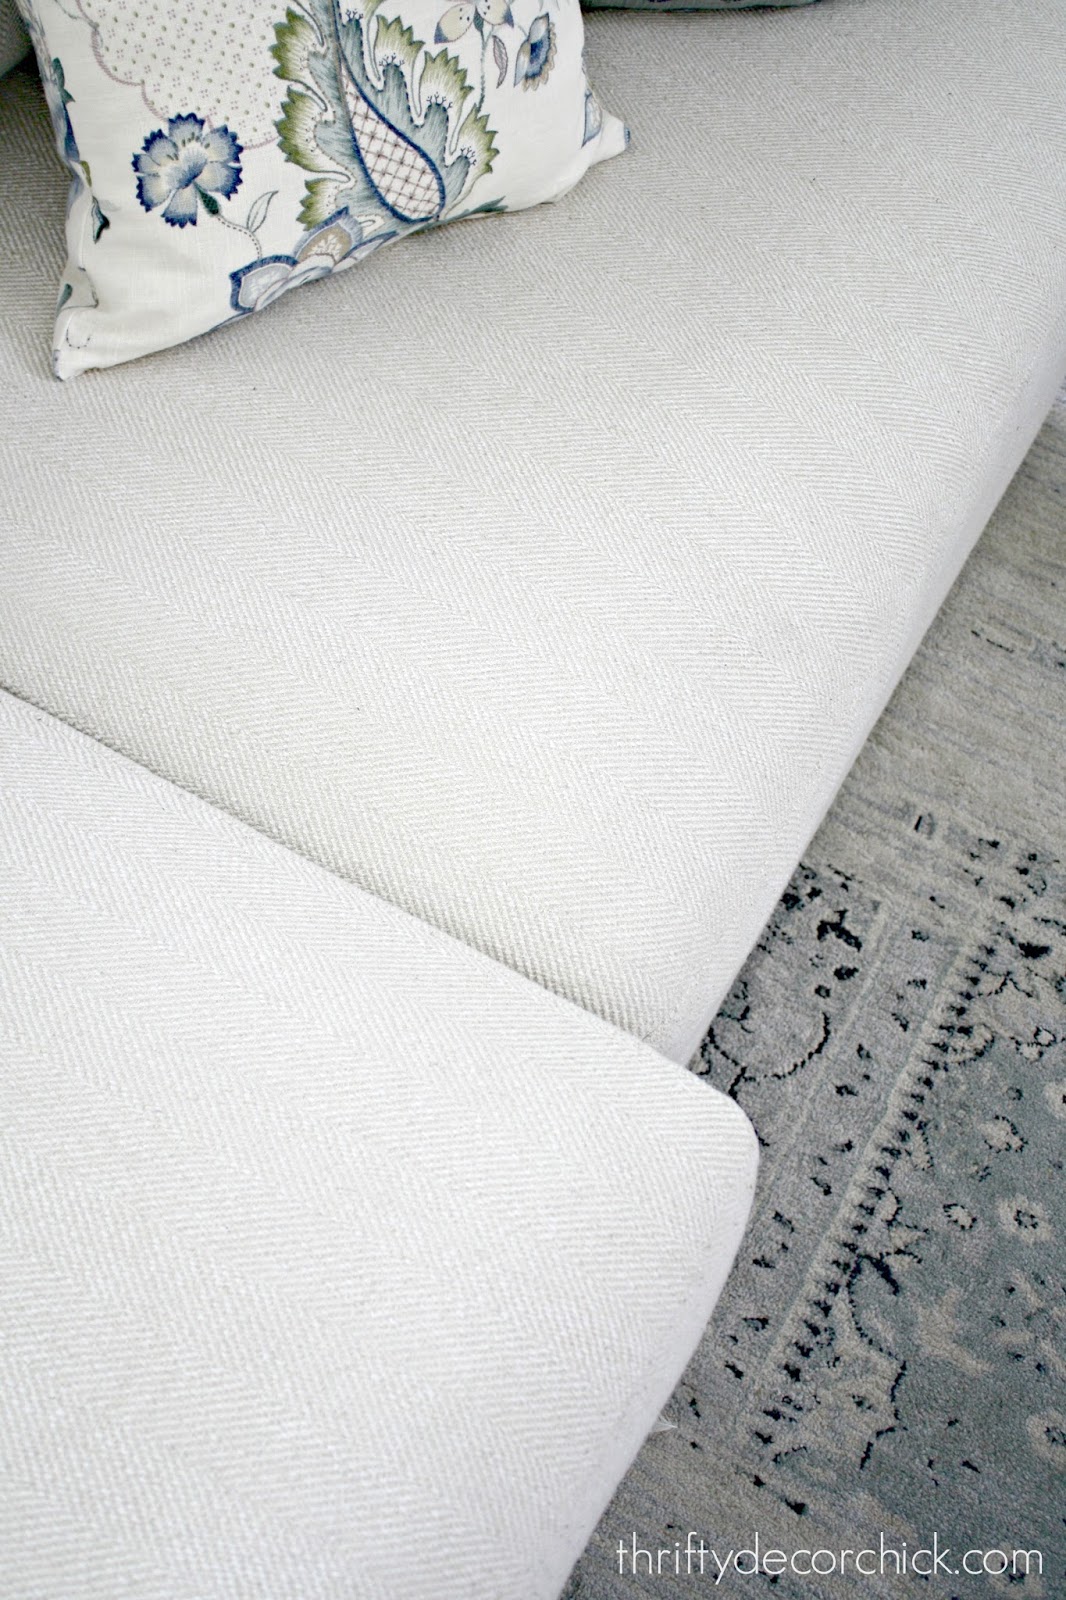 Sofa Cushions - Sofa Cushions - Feather Cushion Inserts - Couch Cushions -  Upholstery Cushions